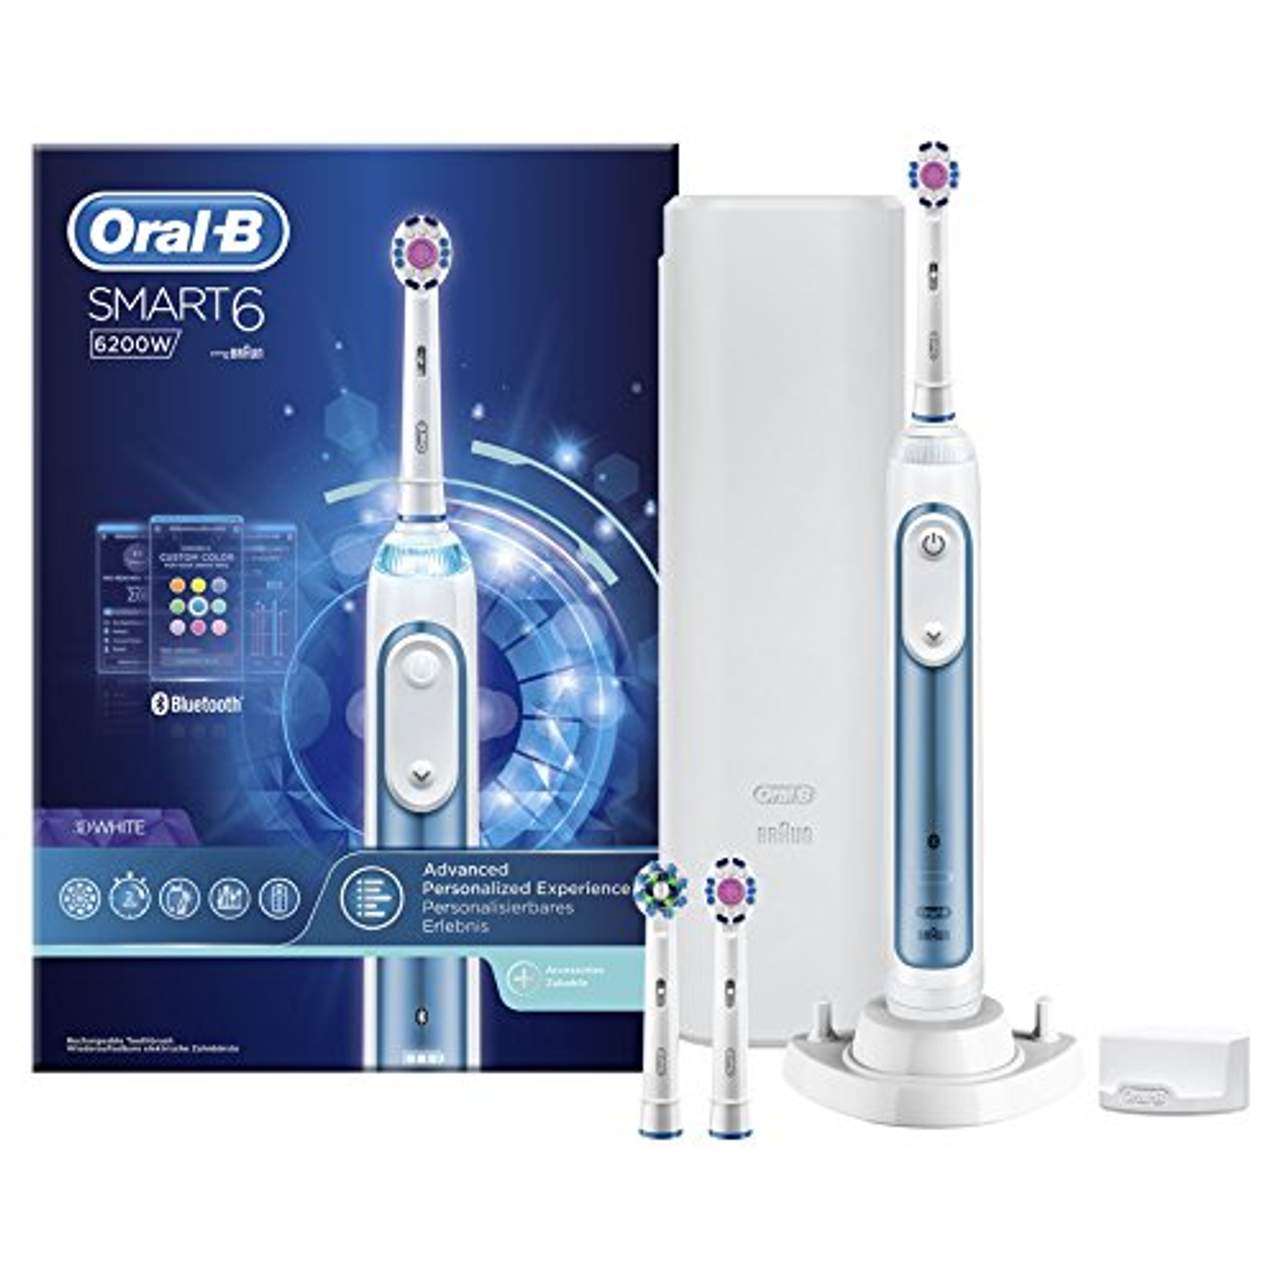 Oral-B Smart 6 6200W 